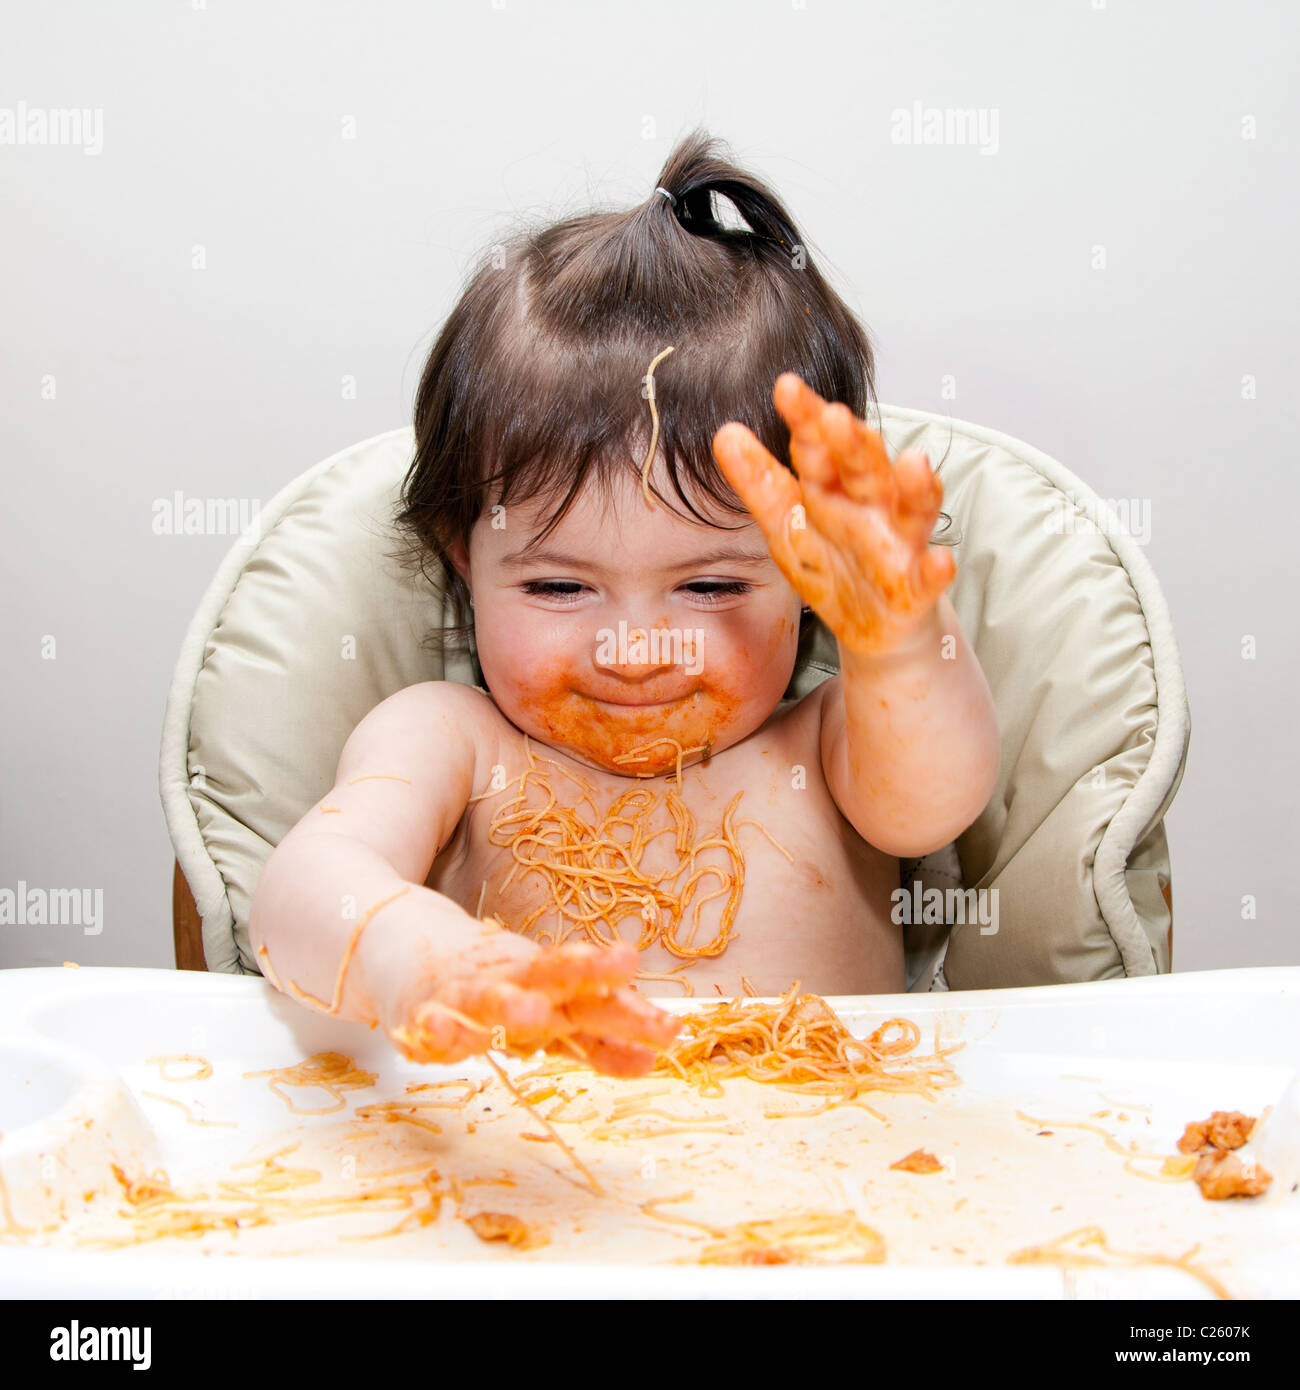 Happy baby having fun eating messy slapping hands covered in Spaghetti Angel Hair Pasta red marinara tomato sauce. Stock Photo